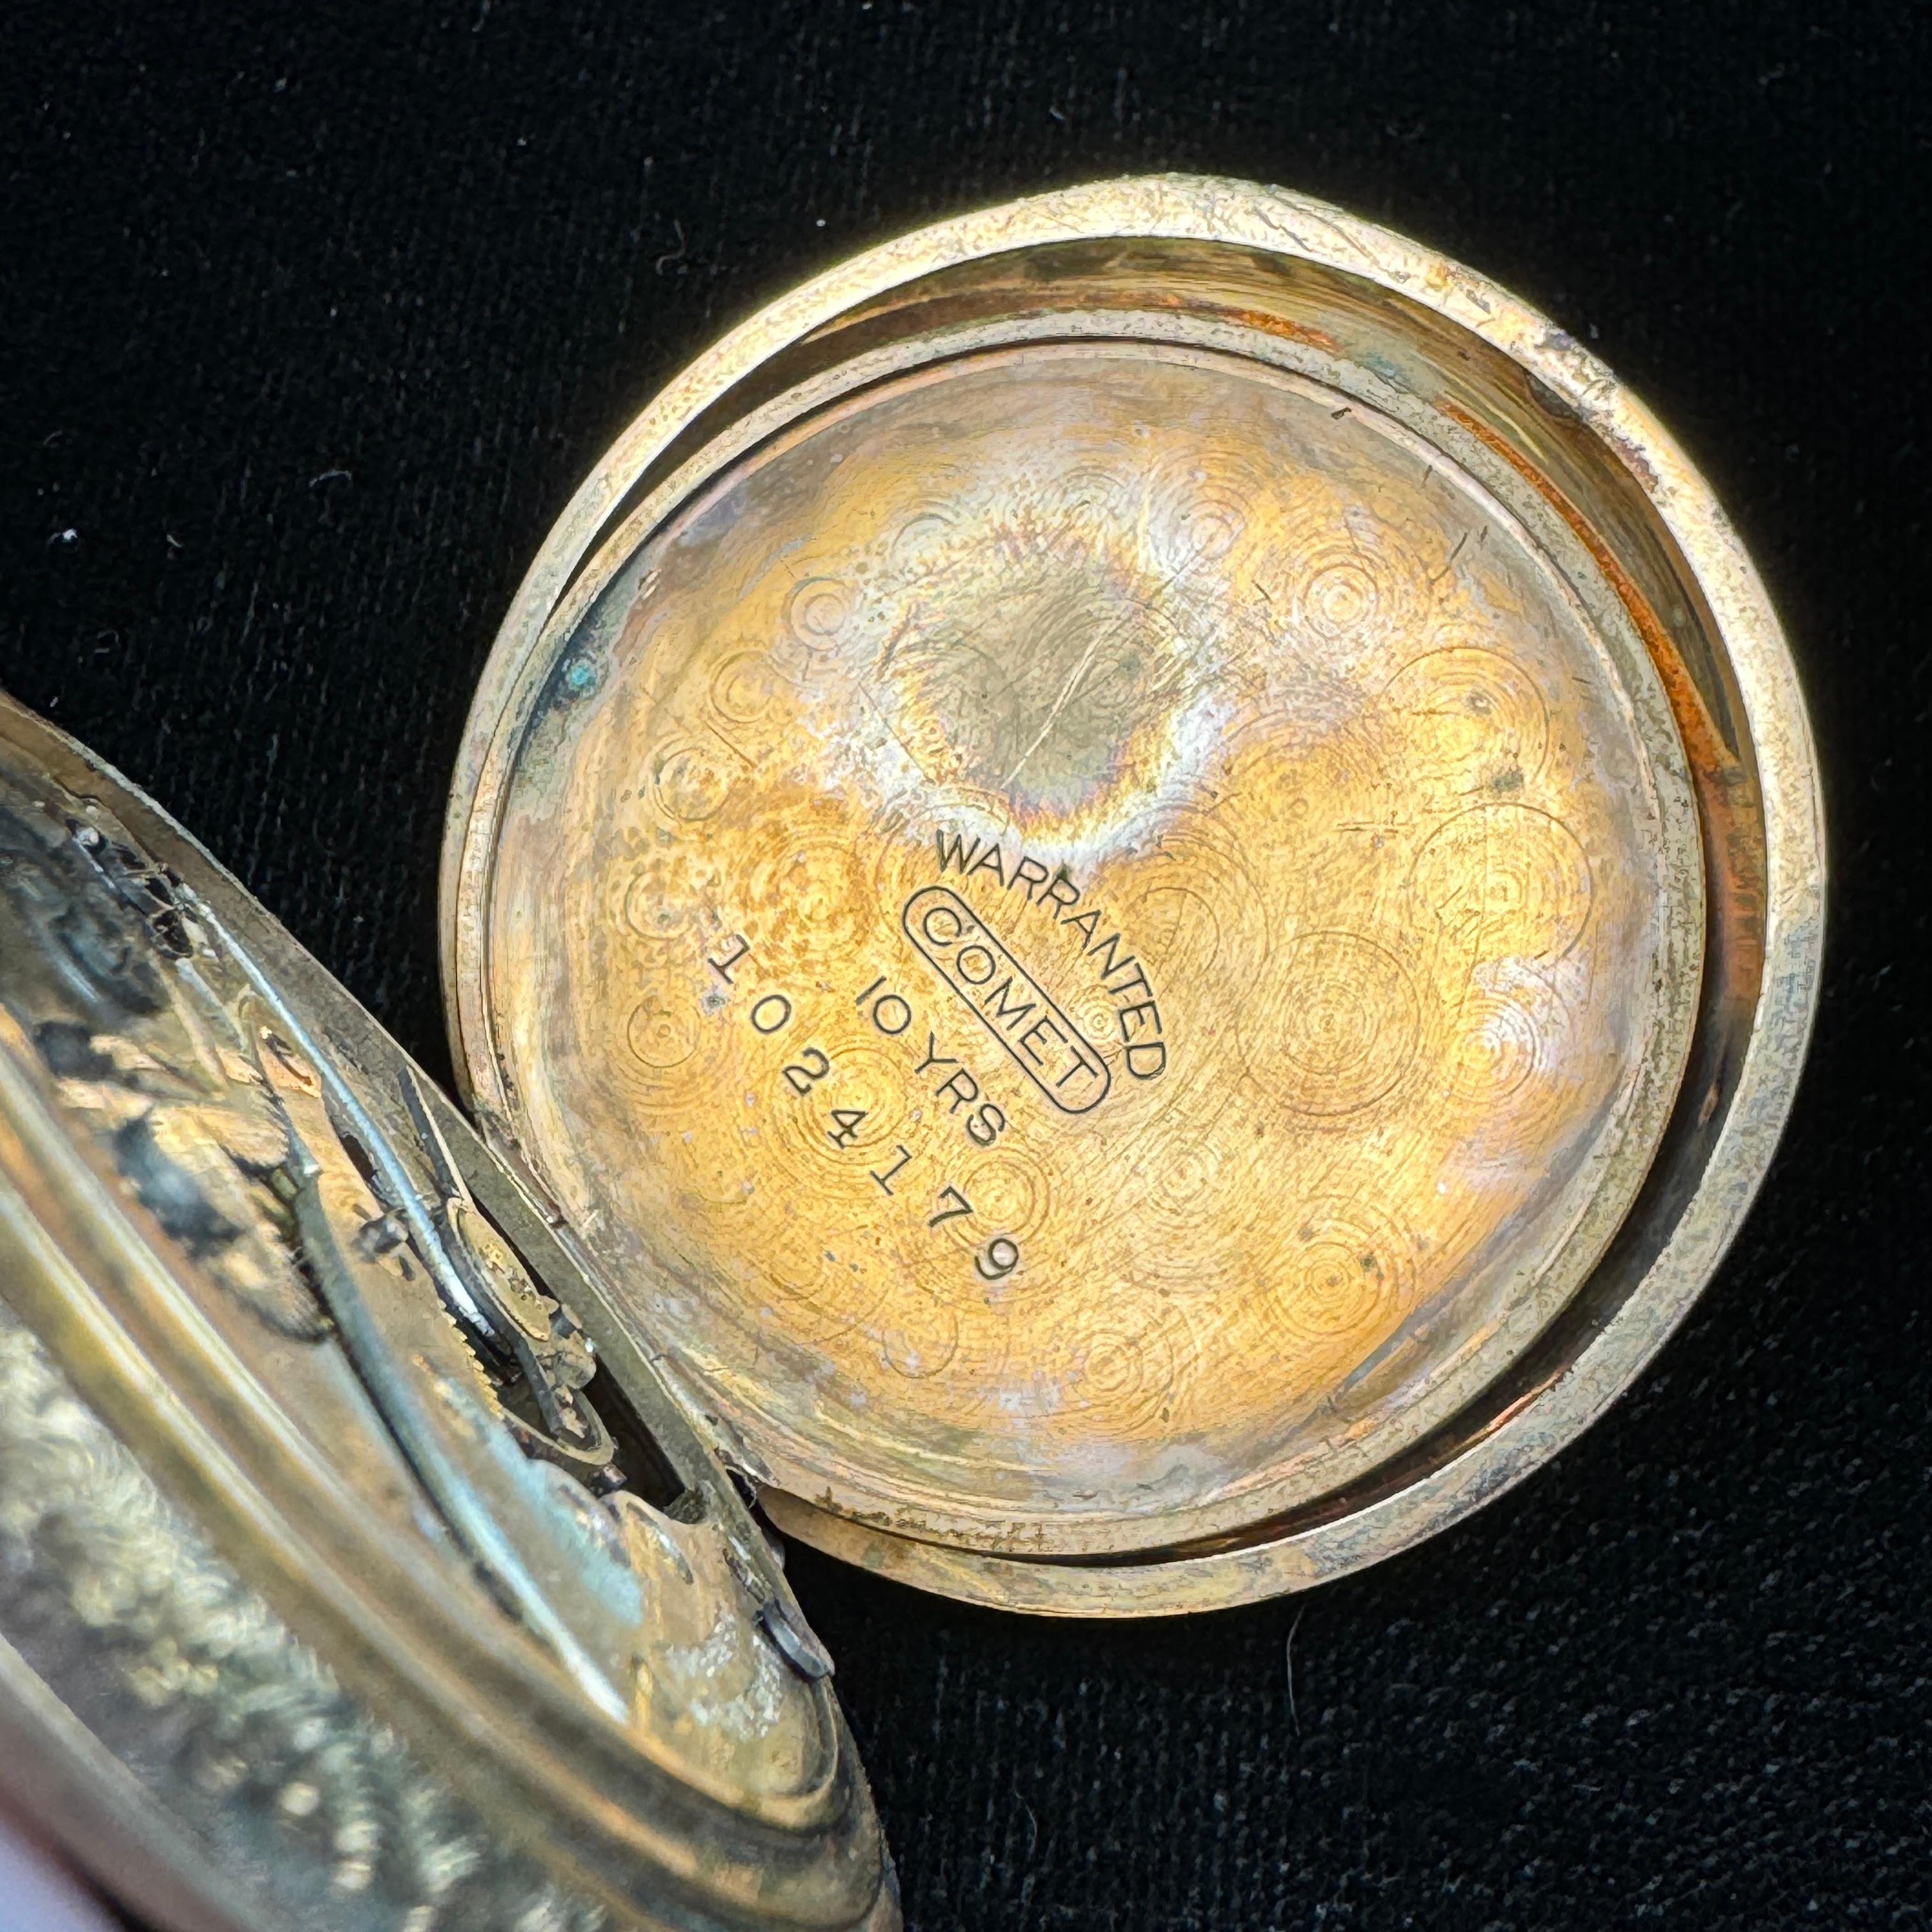 Circa 1940 7-jewel Swiss Locust covered pocket watch